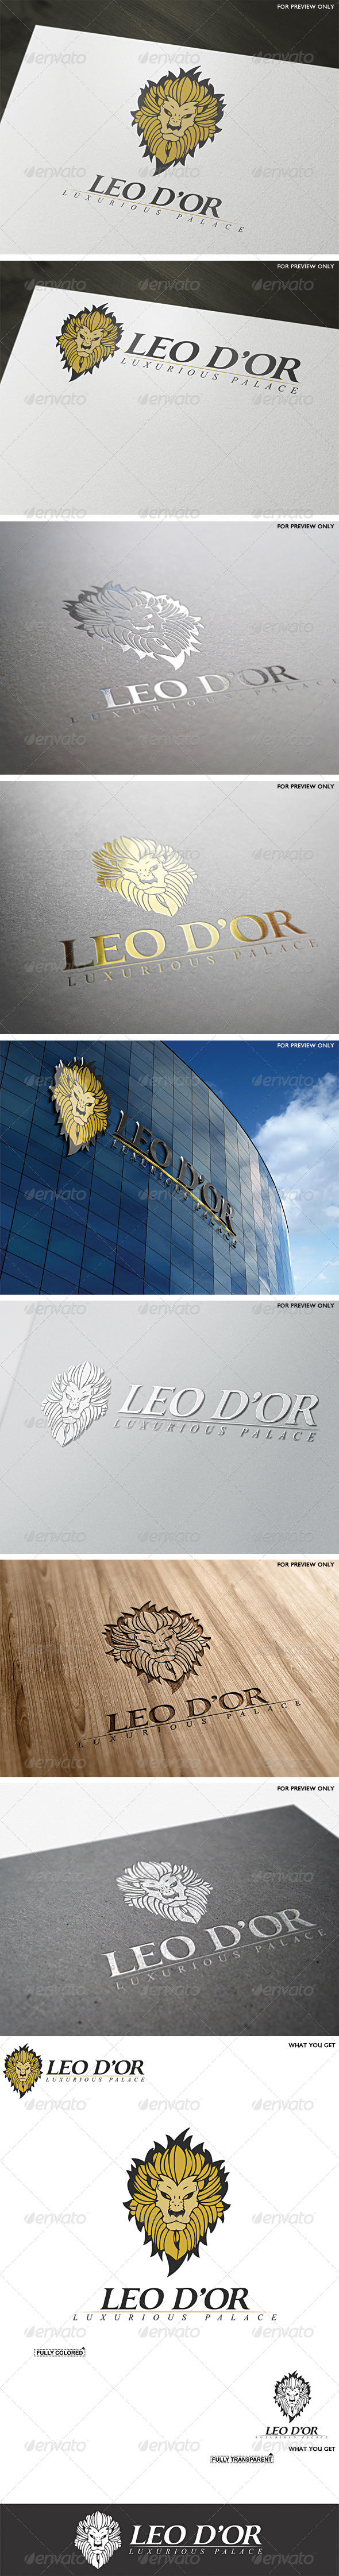 Leo D'or Lion Head Logo Template